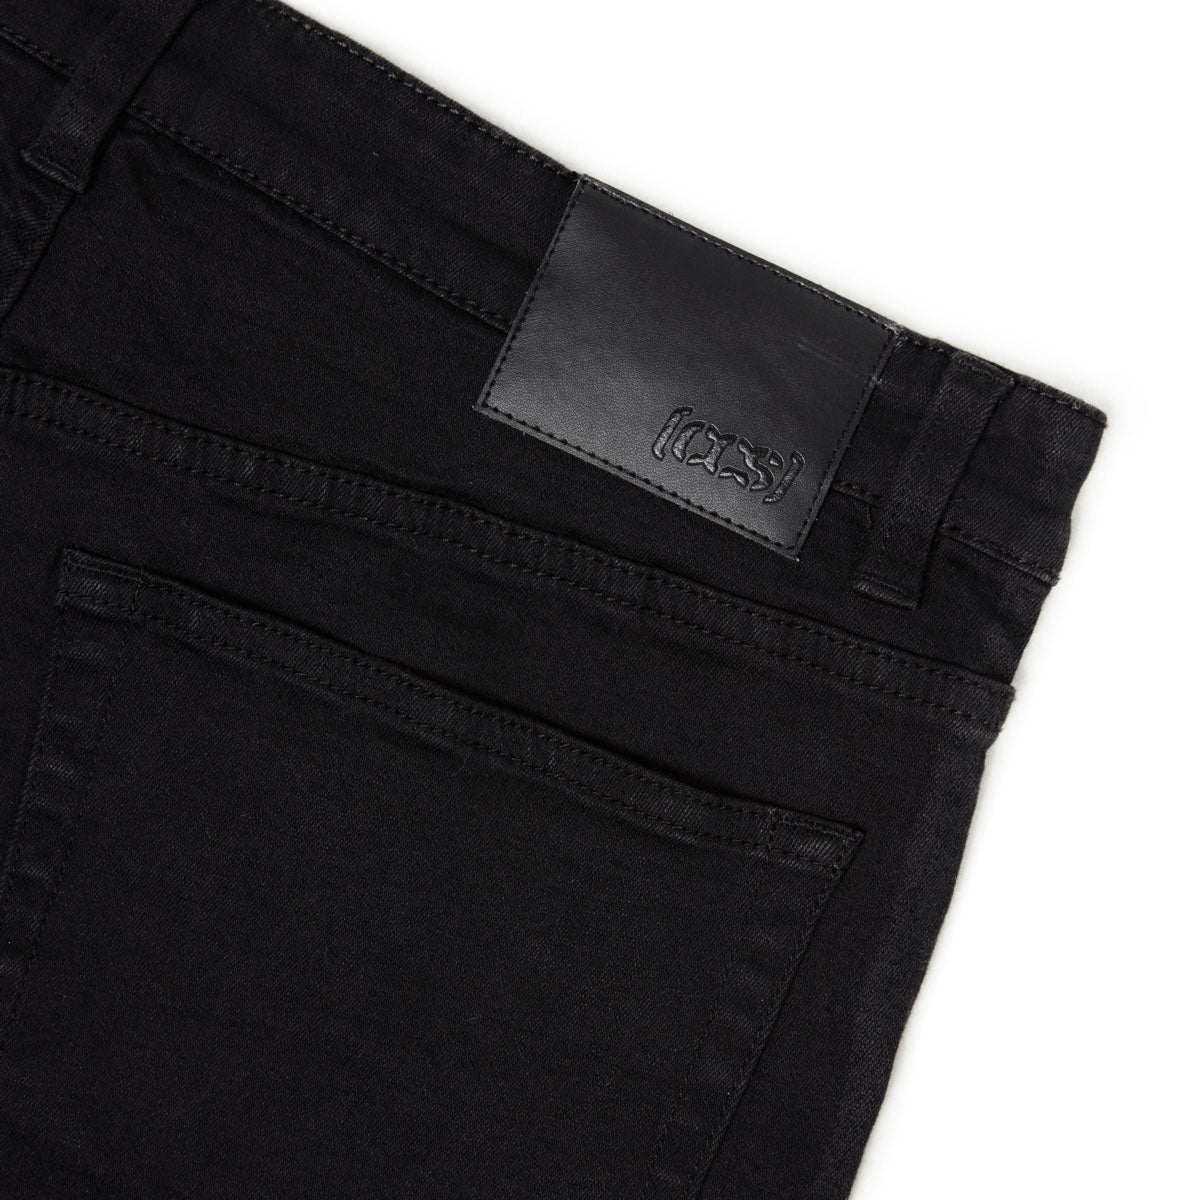 CCS Standard Plus Straight Denim Jeans - Overdyed Black image 6